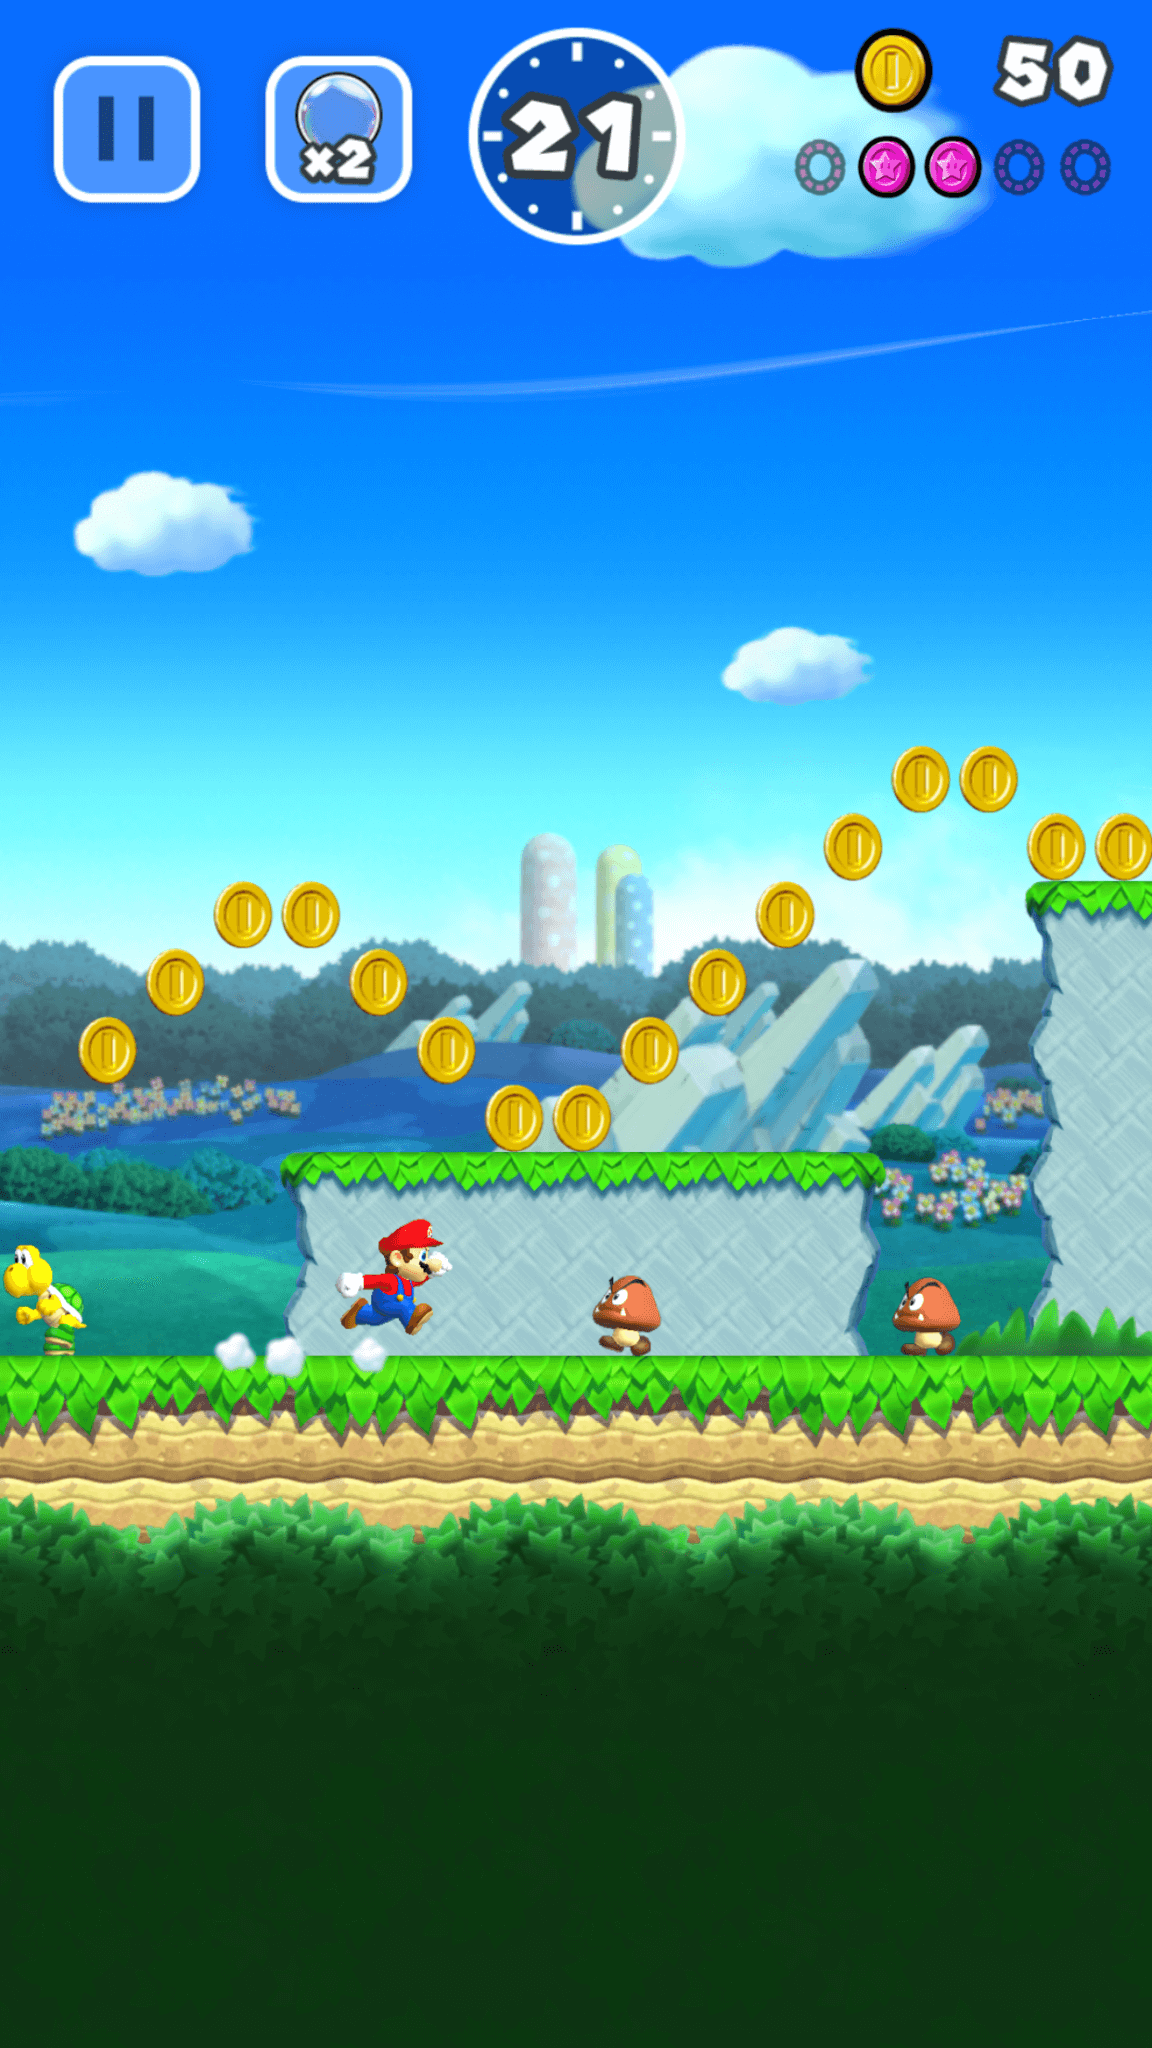 Super Mario Run: Pilze pflastern seinen Weg (Bildrechte: Nintendo)